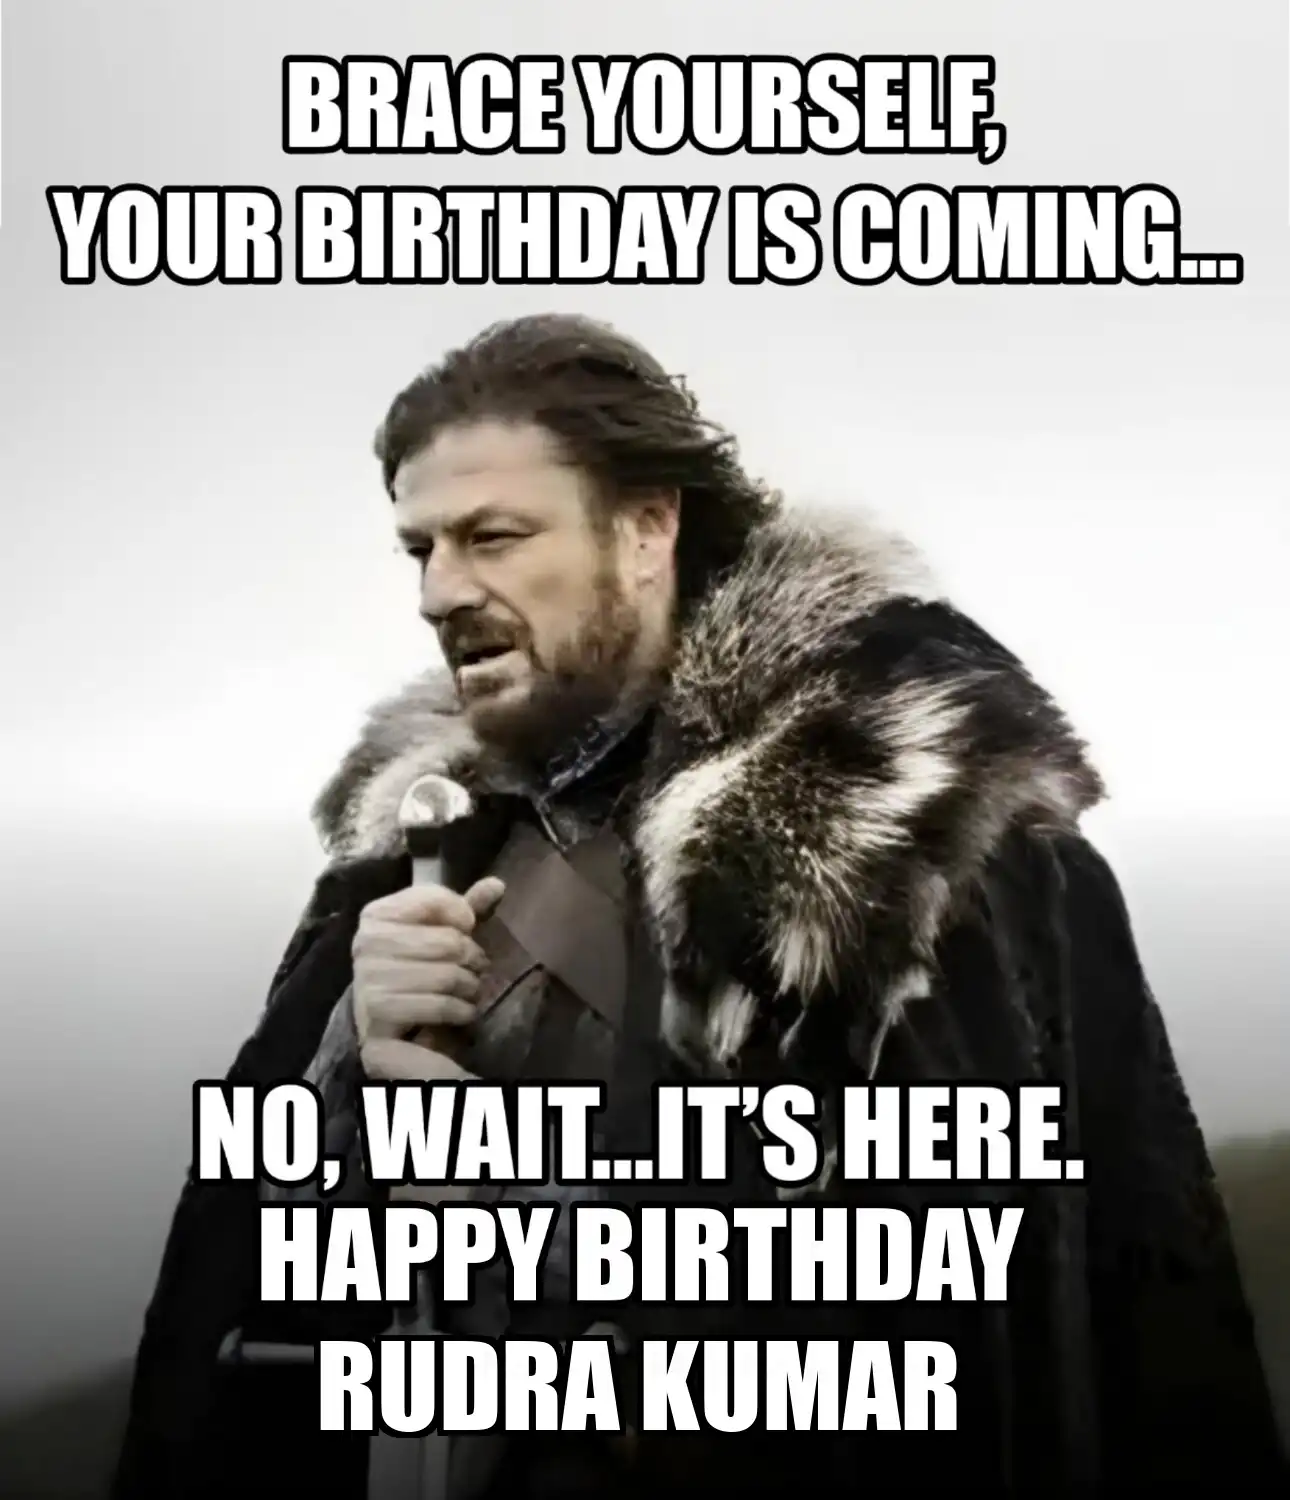 Happy Birthday Rudra Kumar Brace Yourself Your Birthday Is Coming Meme